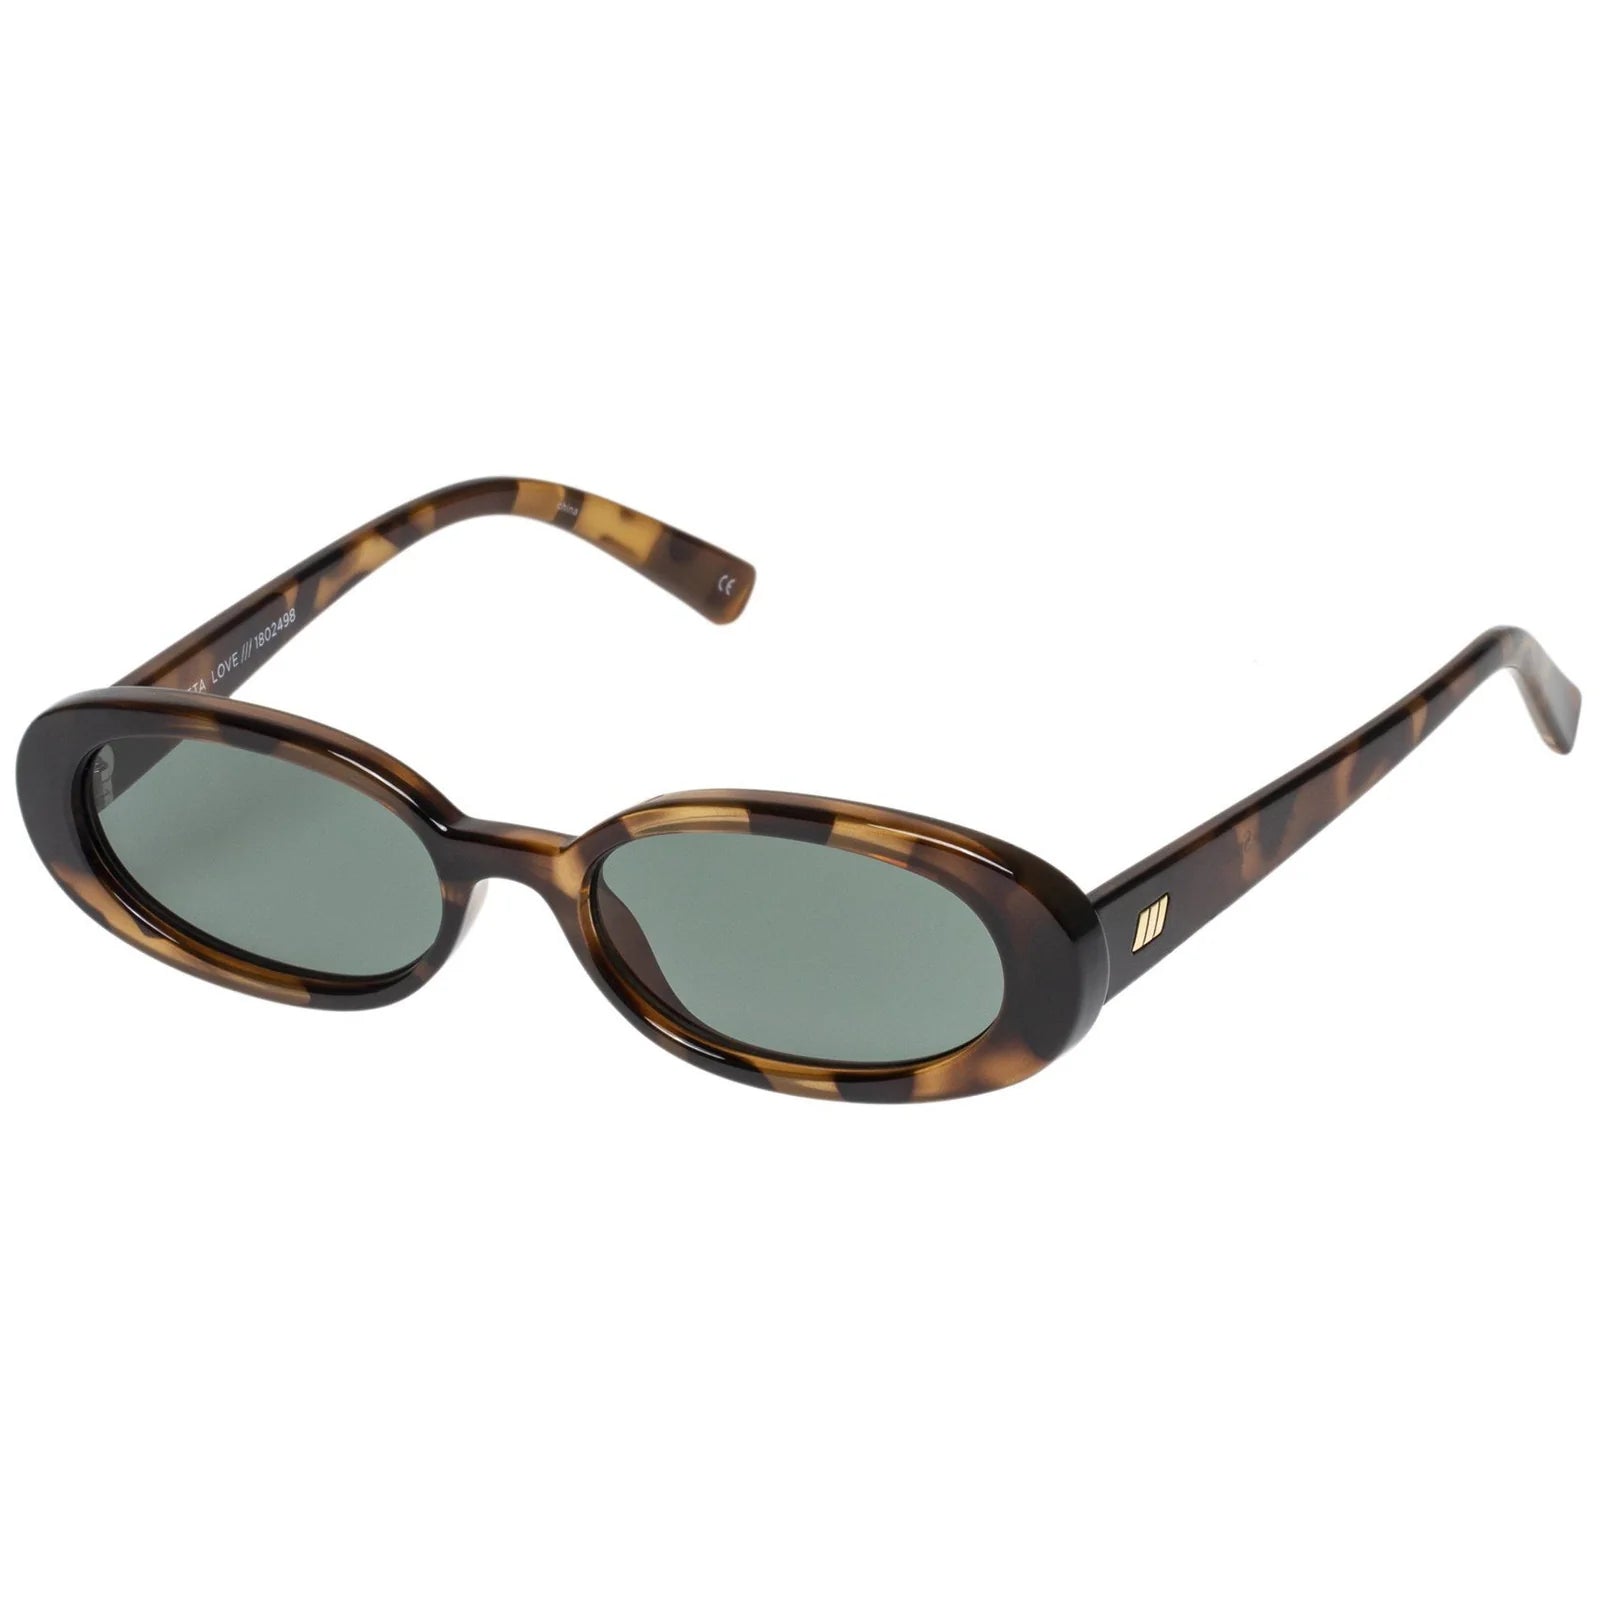 Le Specs Sunglasses - Outta Love Sunglasses - Tortoiseshell